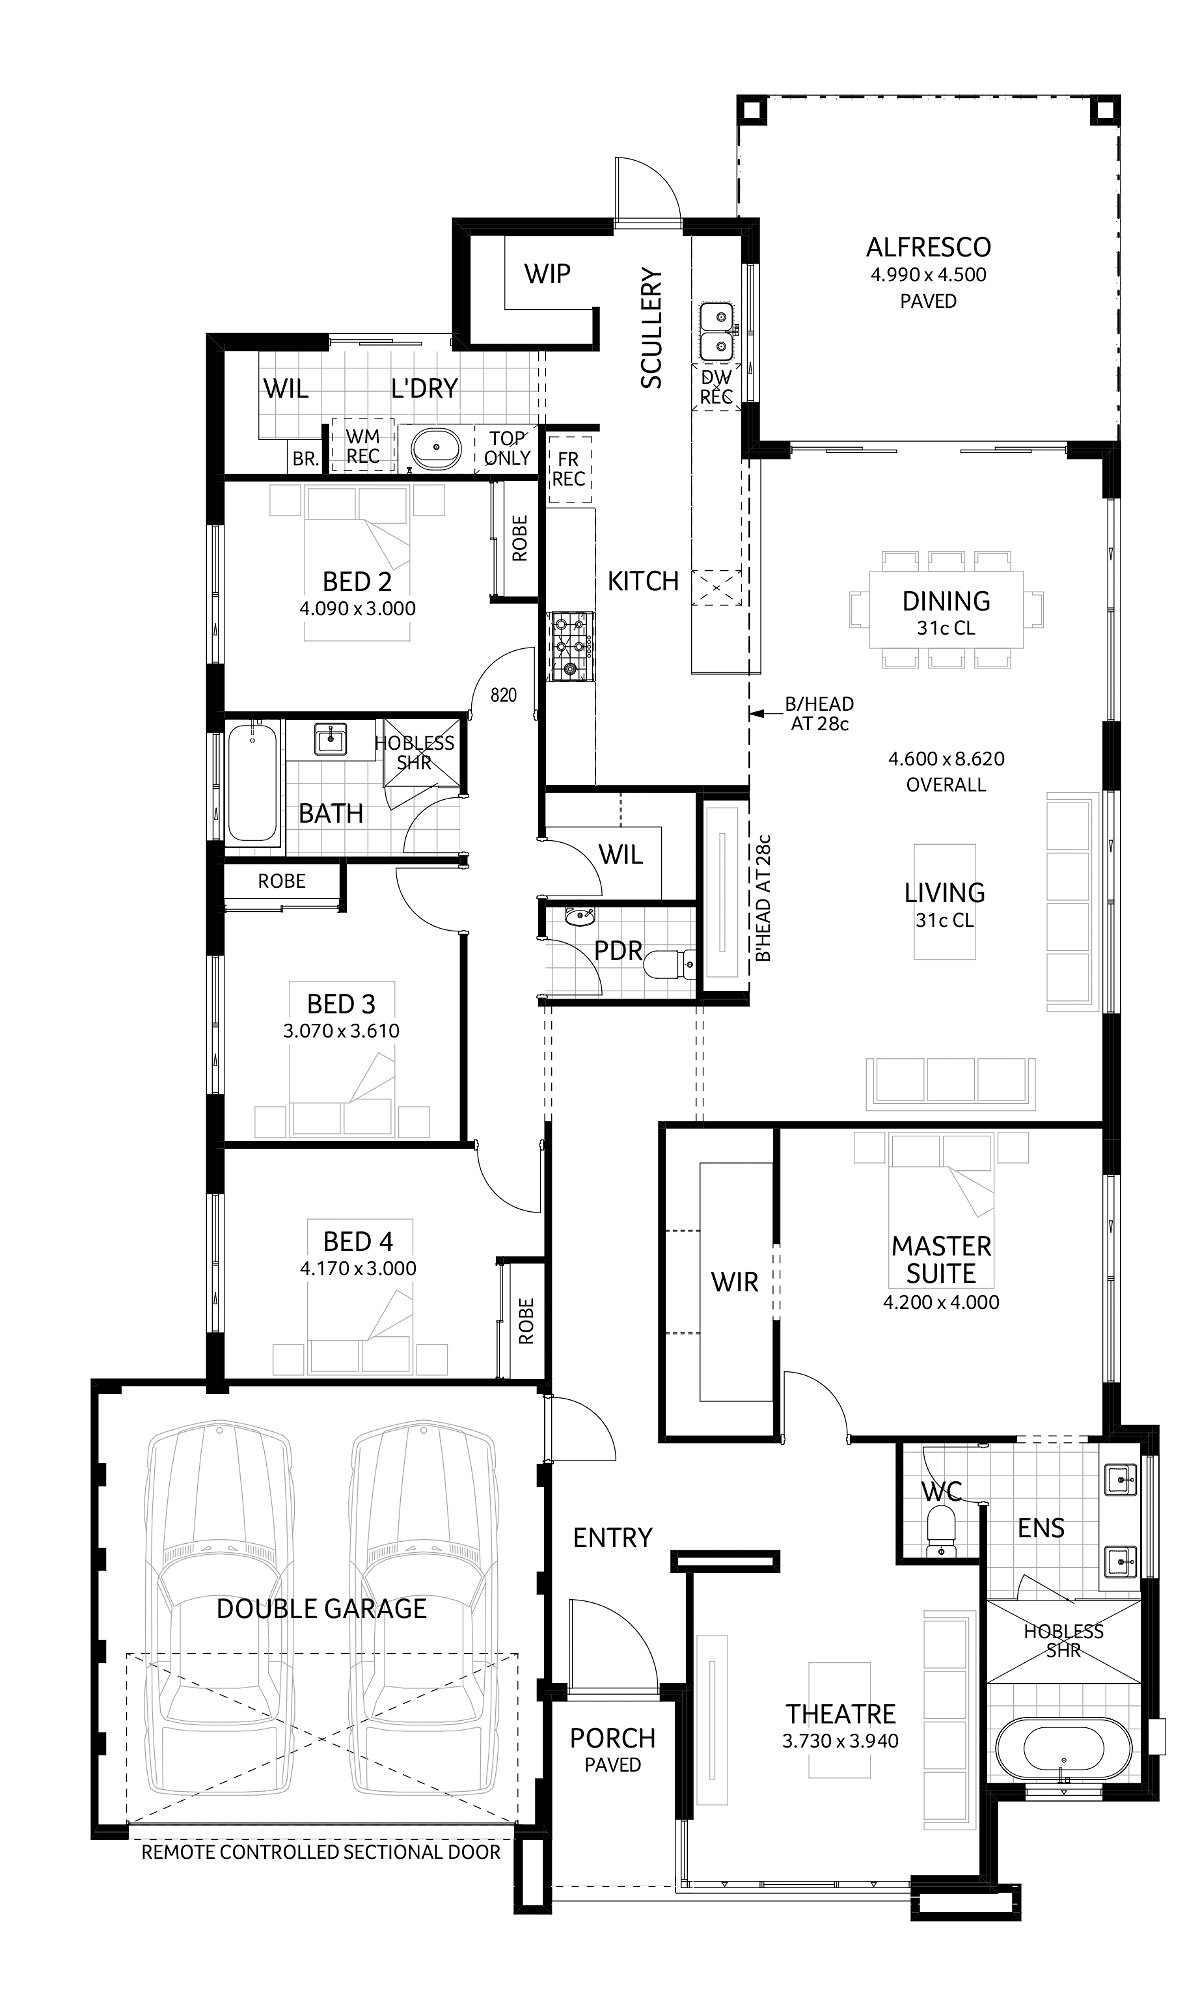 Plunkett Homes - Ambergate | Mid-Century - Floorplan - Vandross Luxe Mid Century Marketing Plan Cropped Jpg